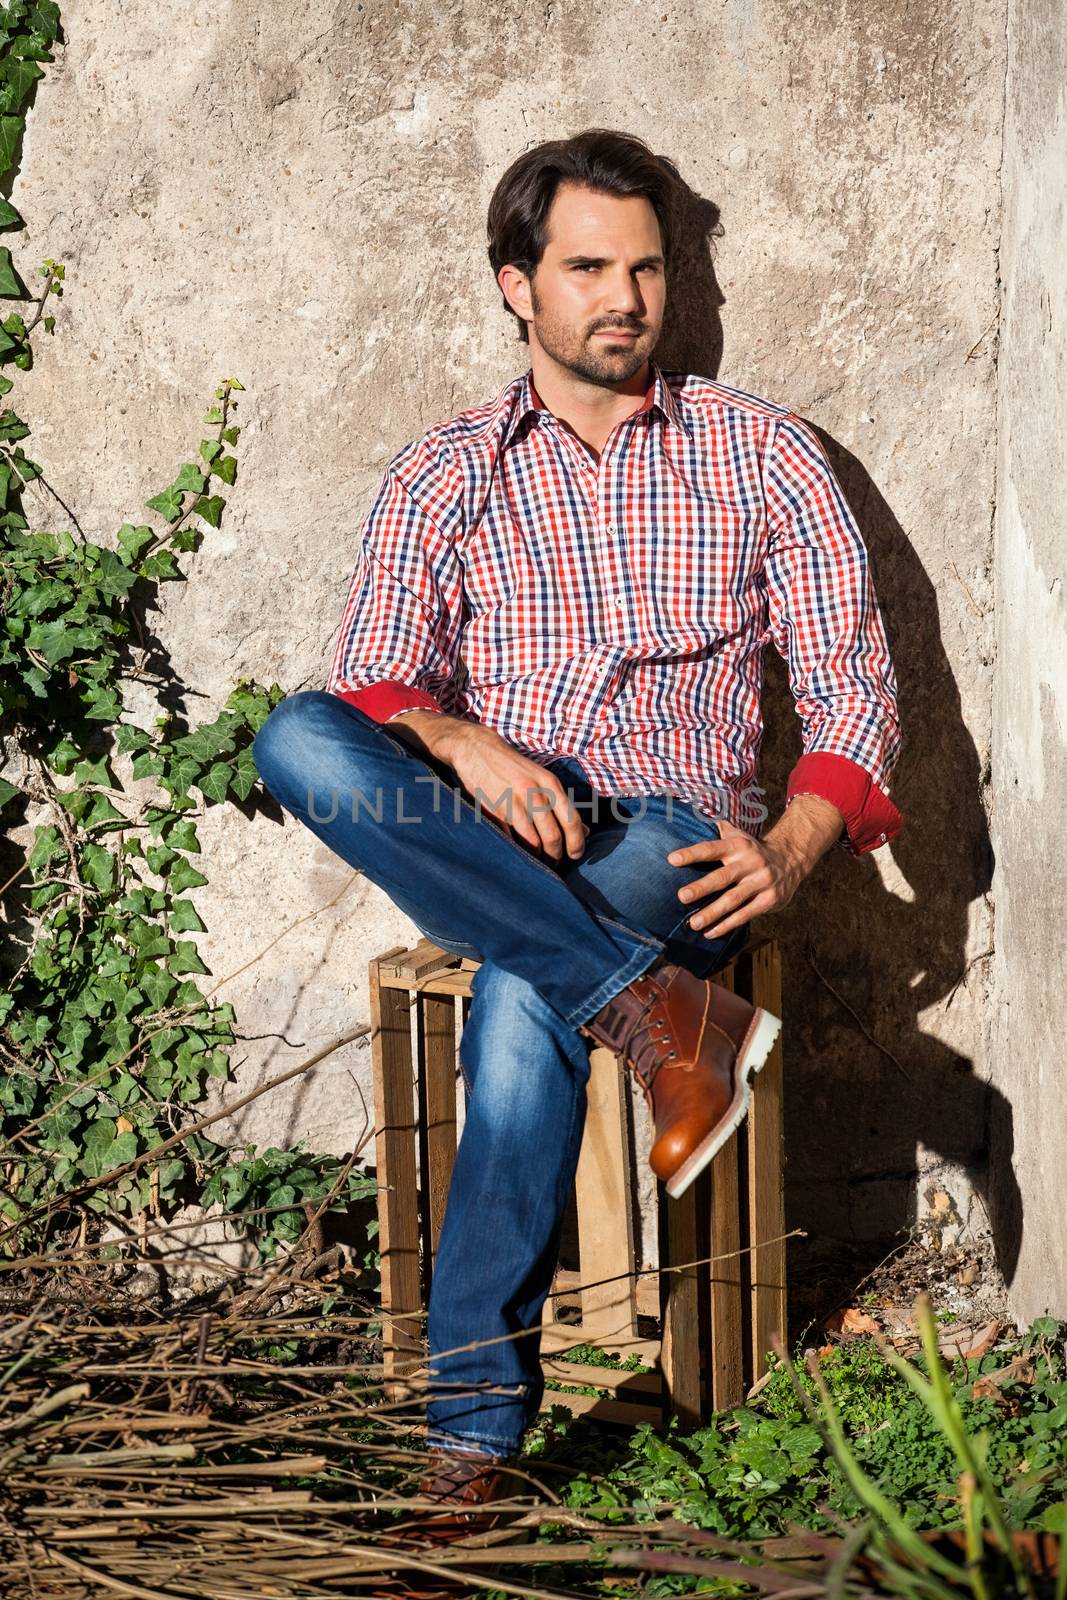 Male model sitting with legs crossed by juniart